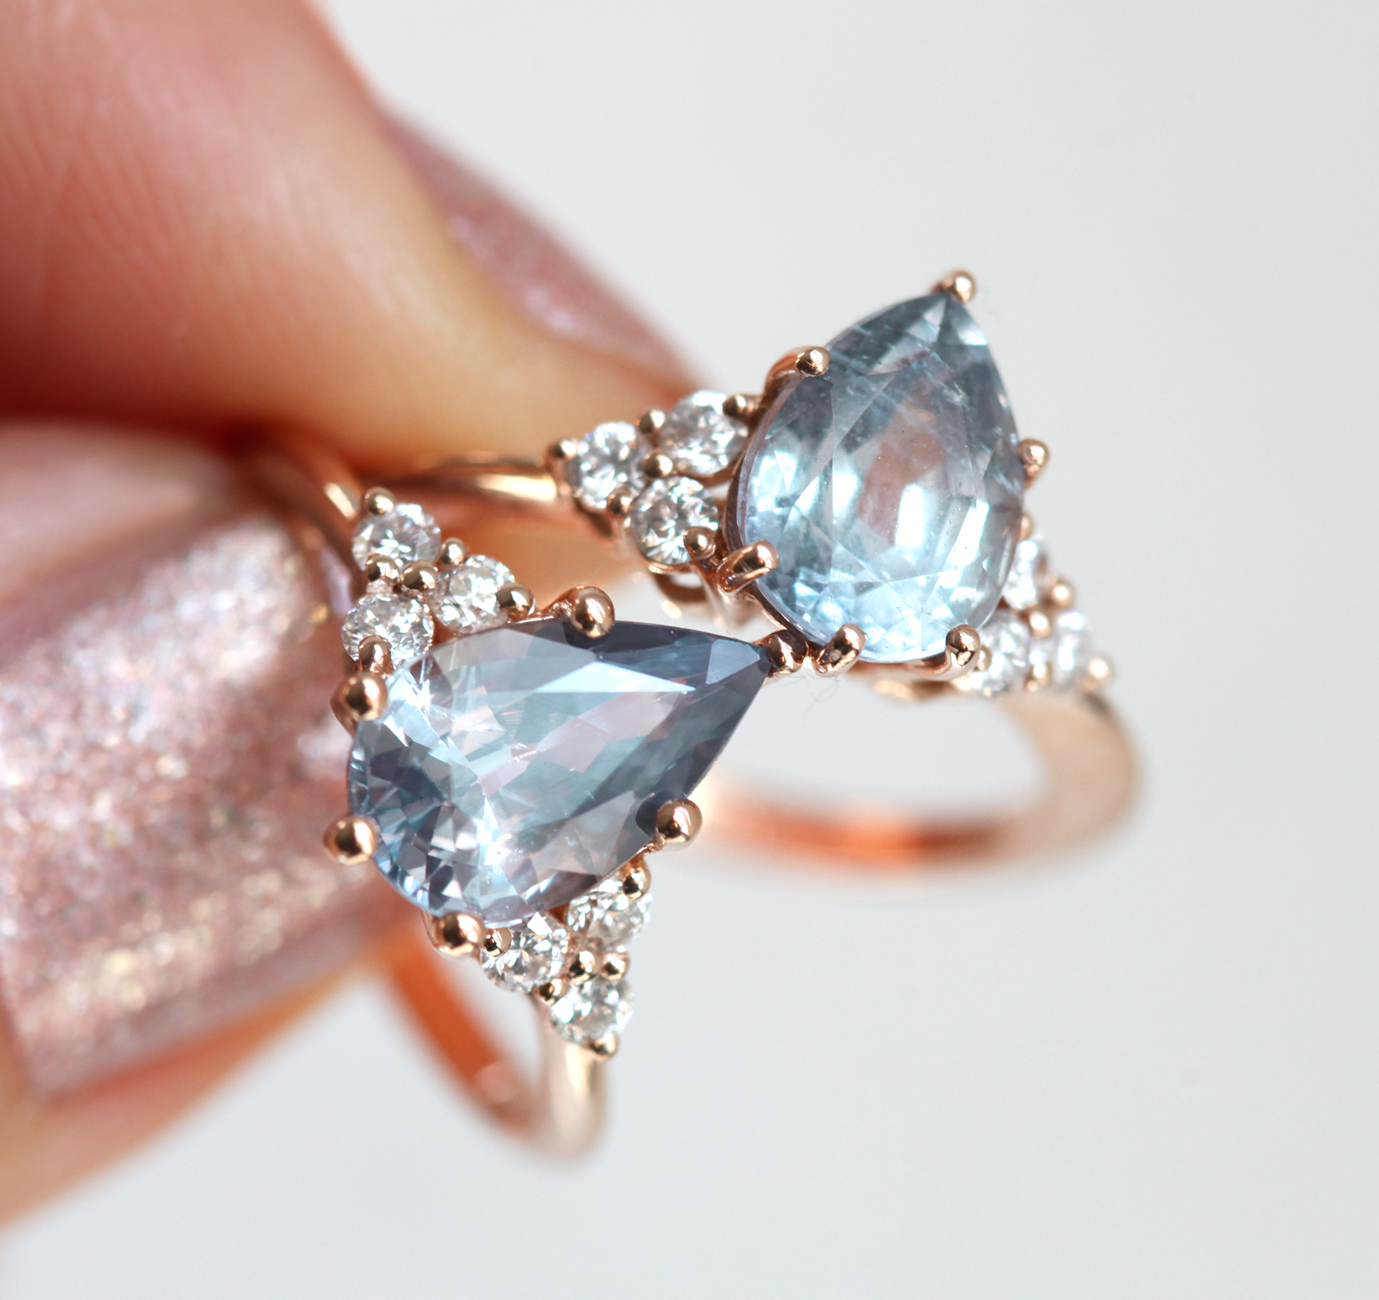 10ct Round Cut Light Blue Sapphire Engagement Ring | SayaBling Jewelry